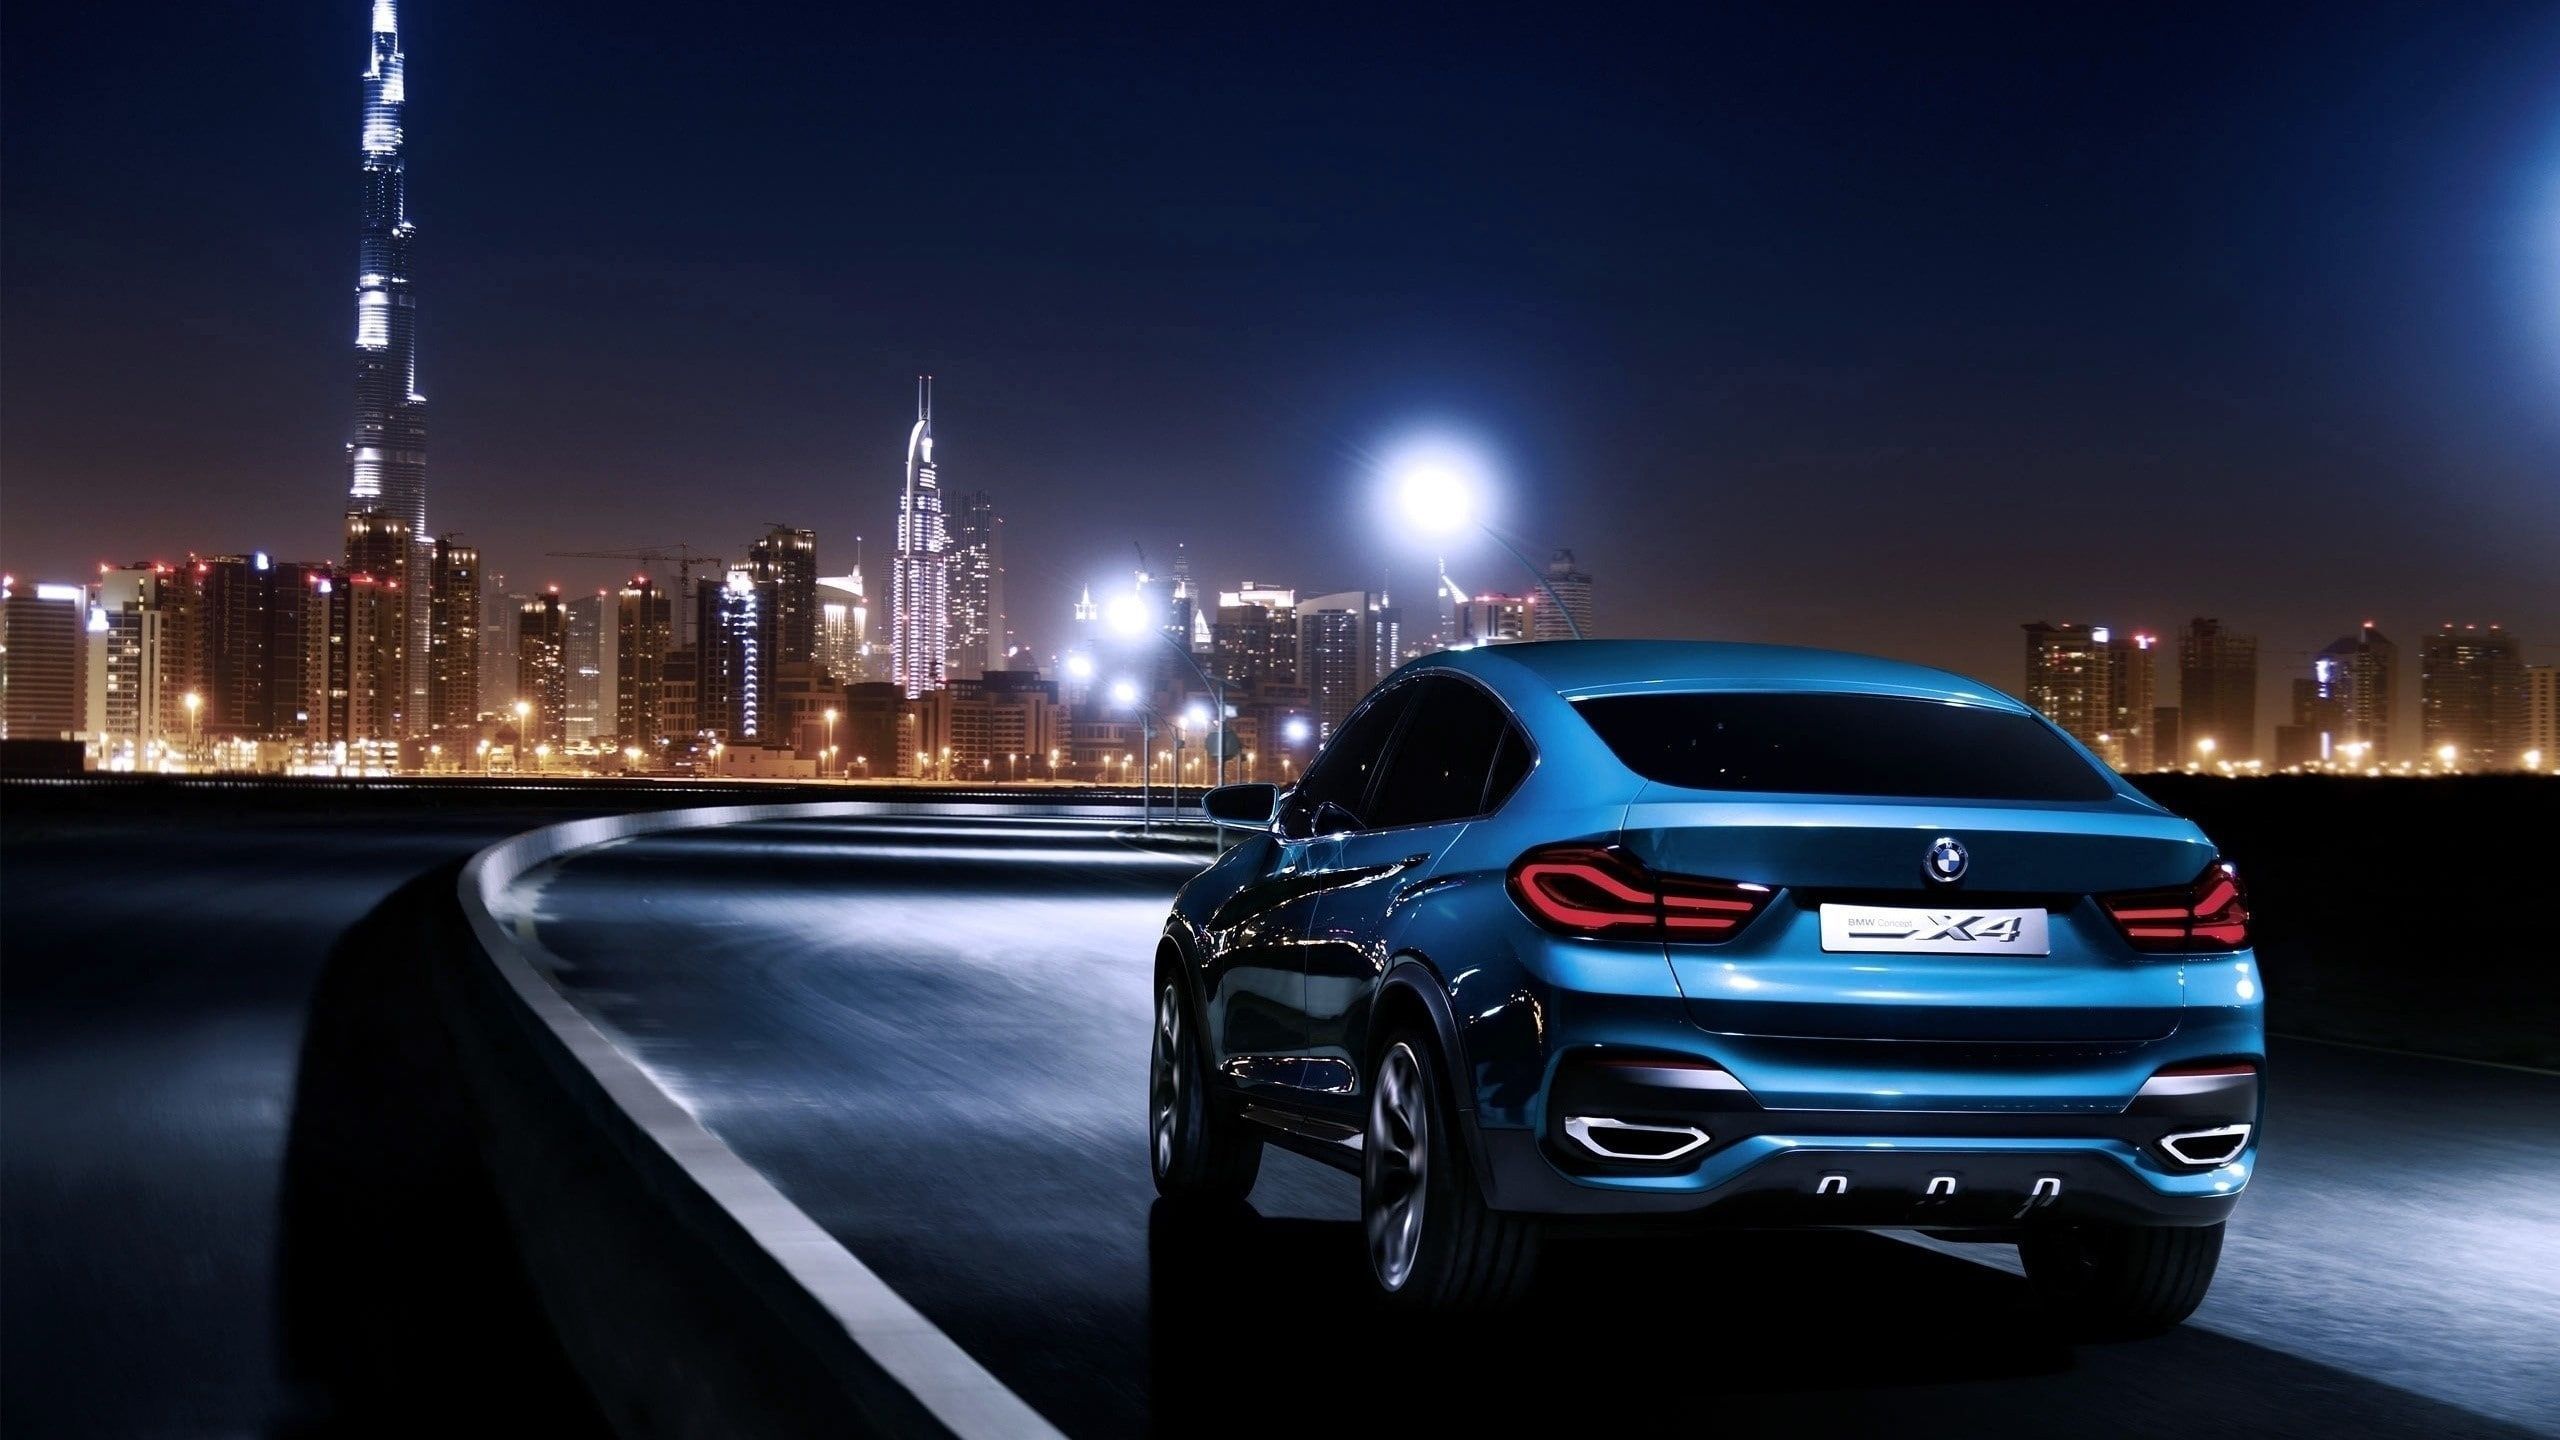 Blue BMW X4 Rear #suv #drive #city #dubai #night K #wallpaper #hdwallpaper #desktop. Bmw, Bmw x Car